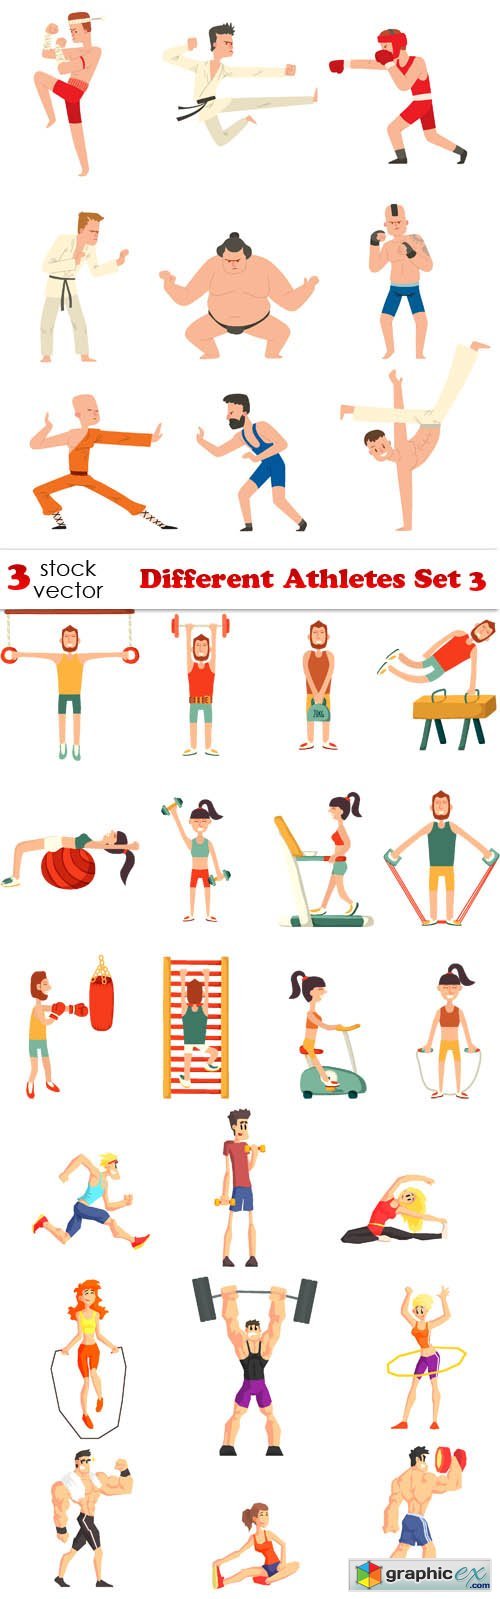 Different Athletes Set 3